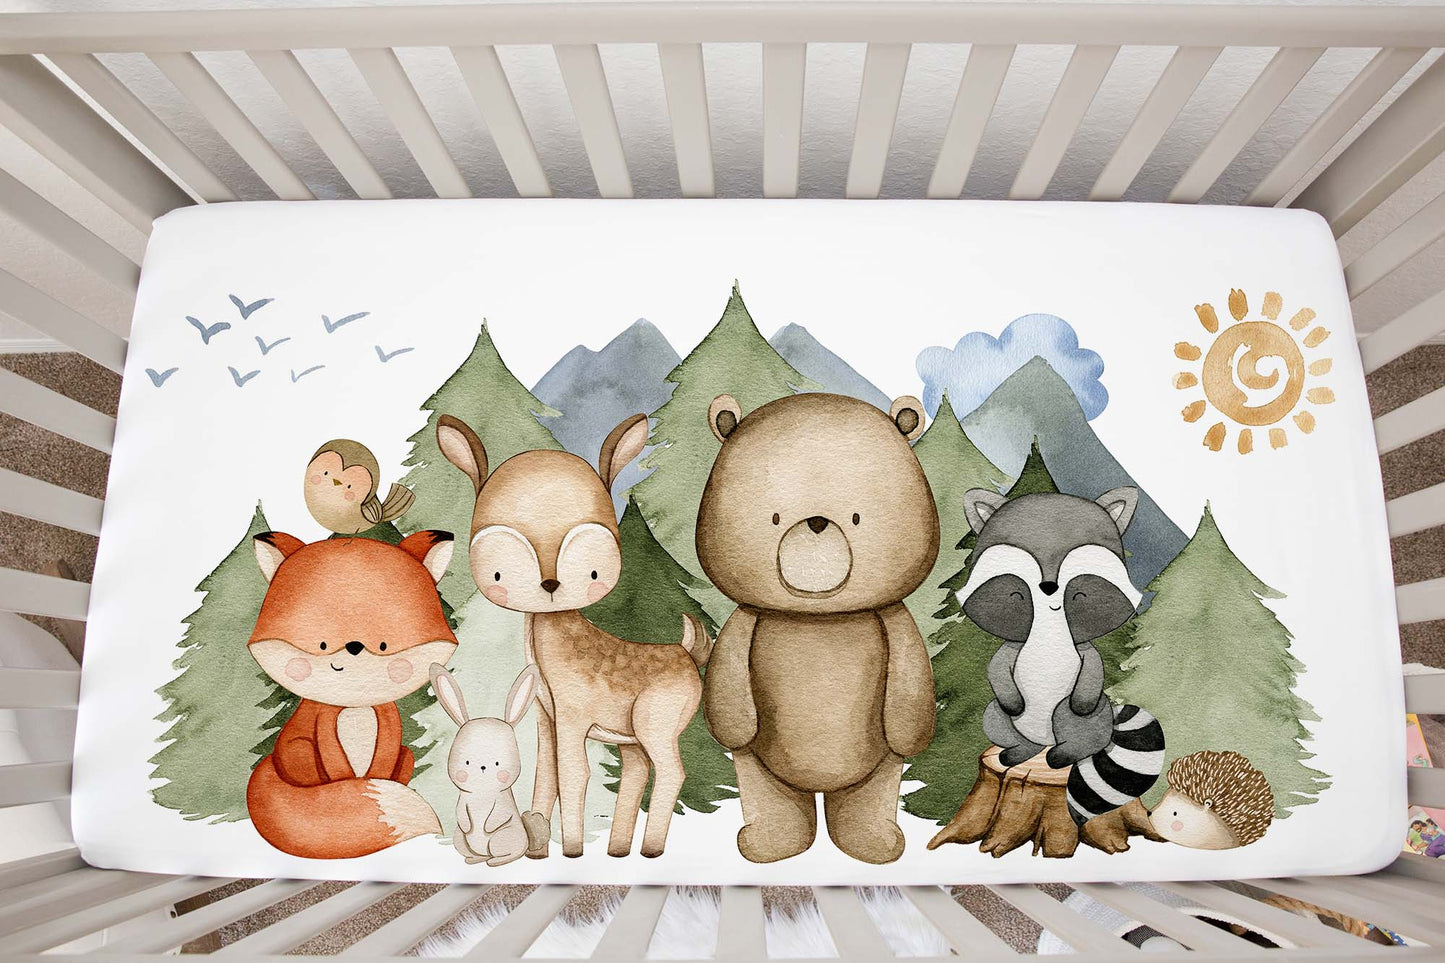 Woodland Crib Sheet, Forest animals nursery decor - Magical Forest